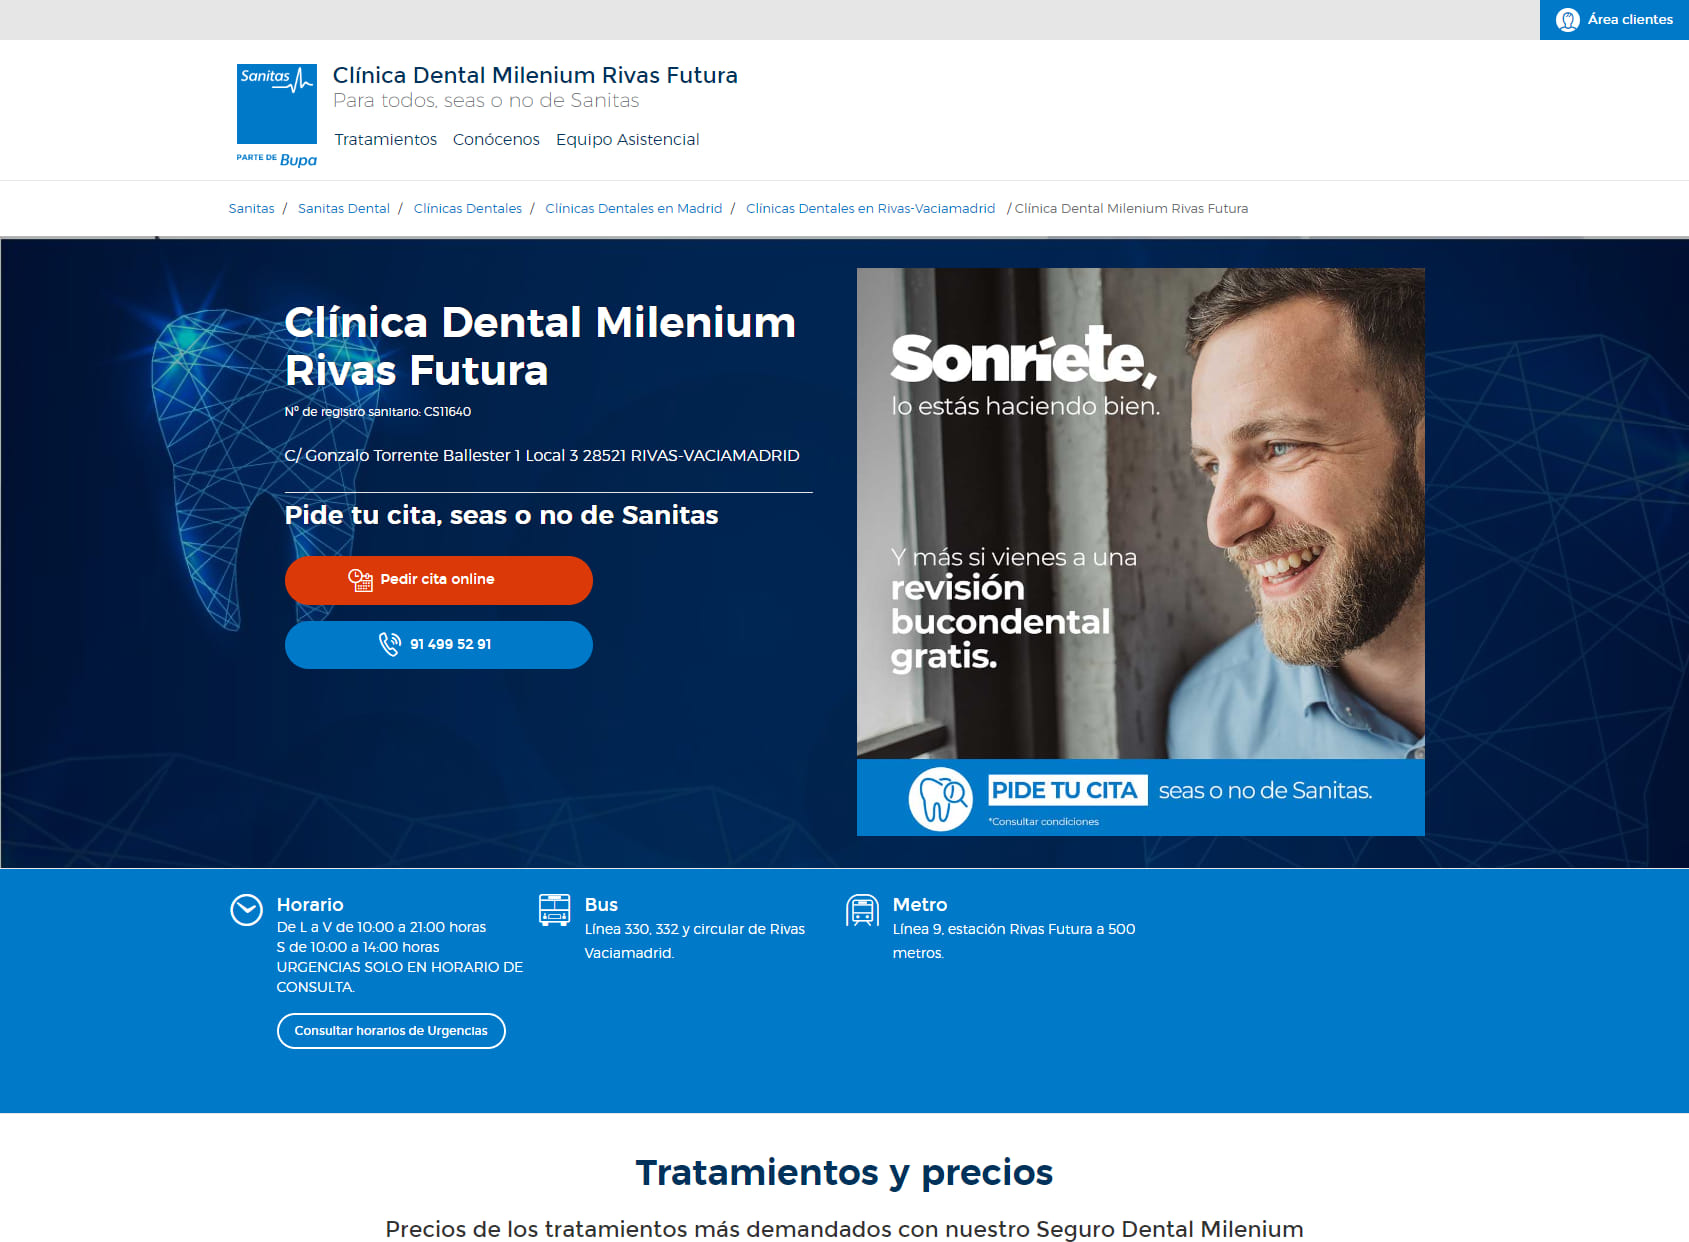 Milenium Dental Clinic Rivas Futura